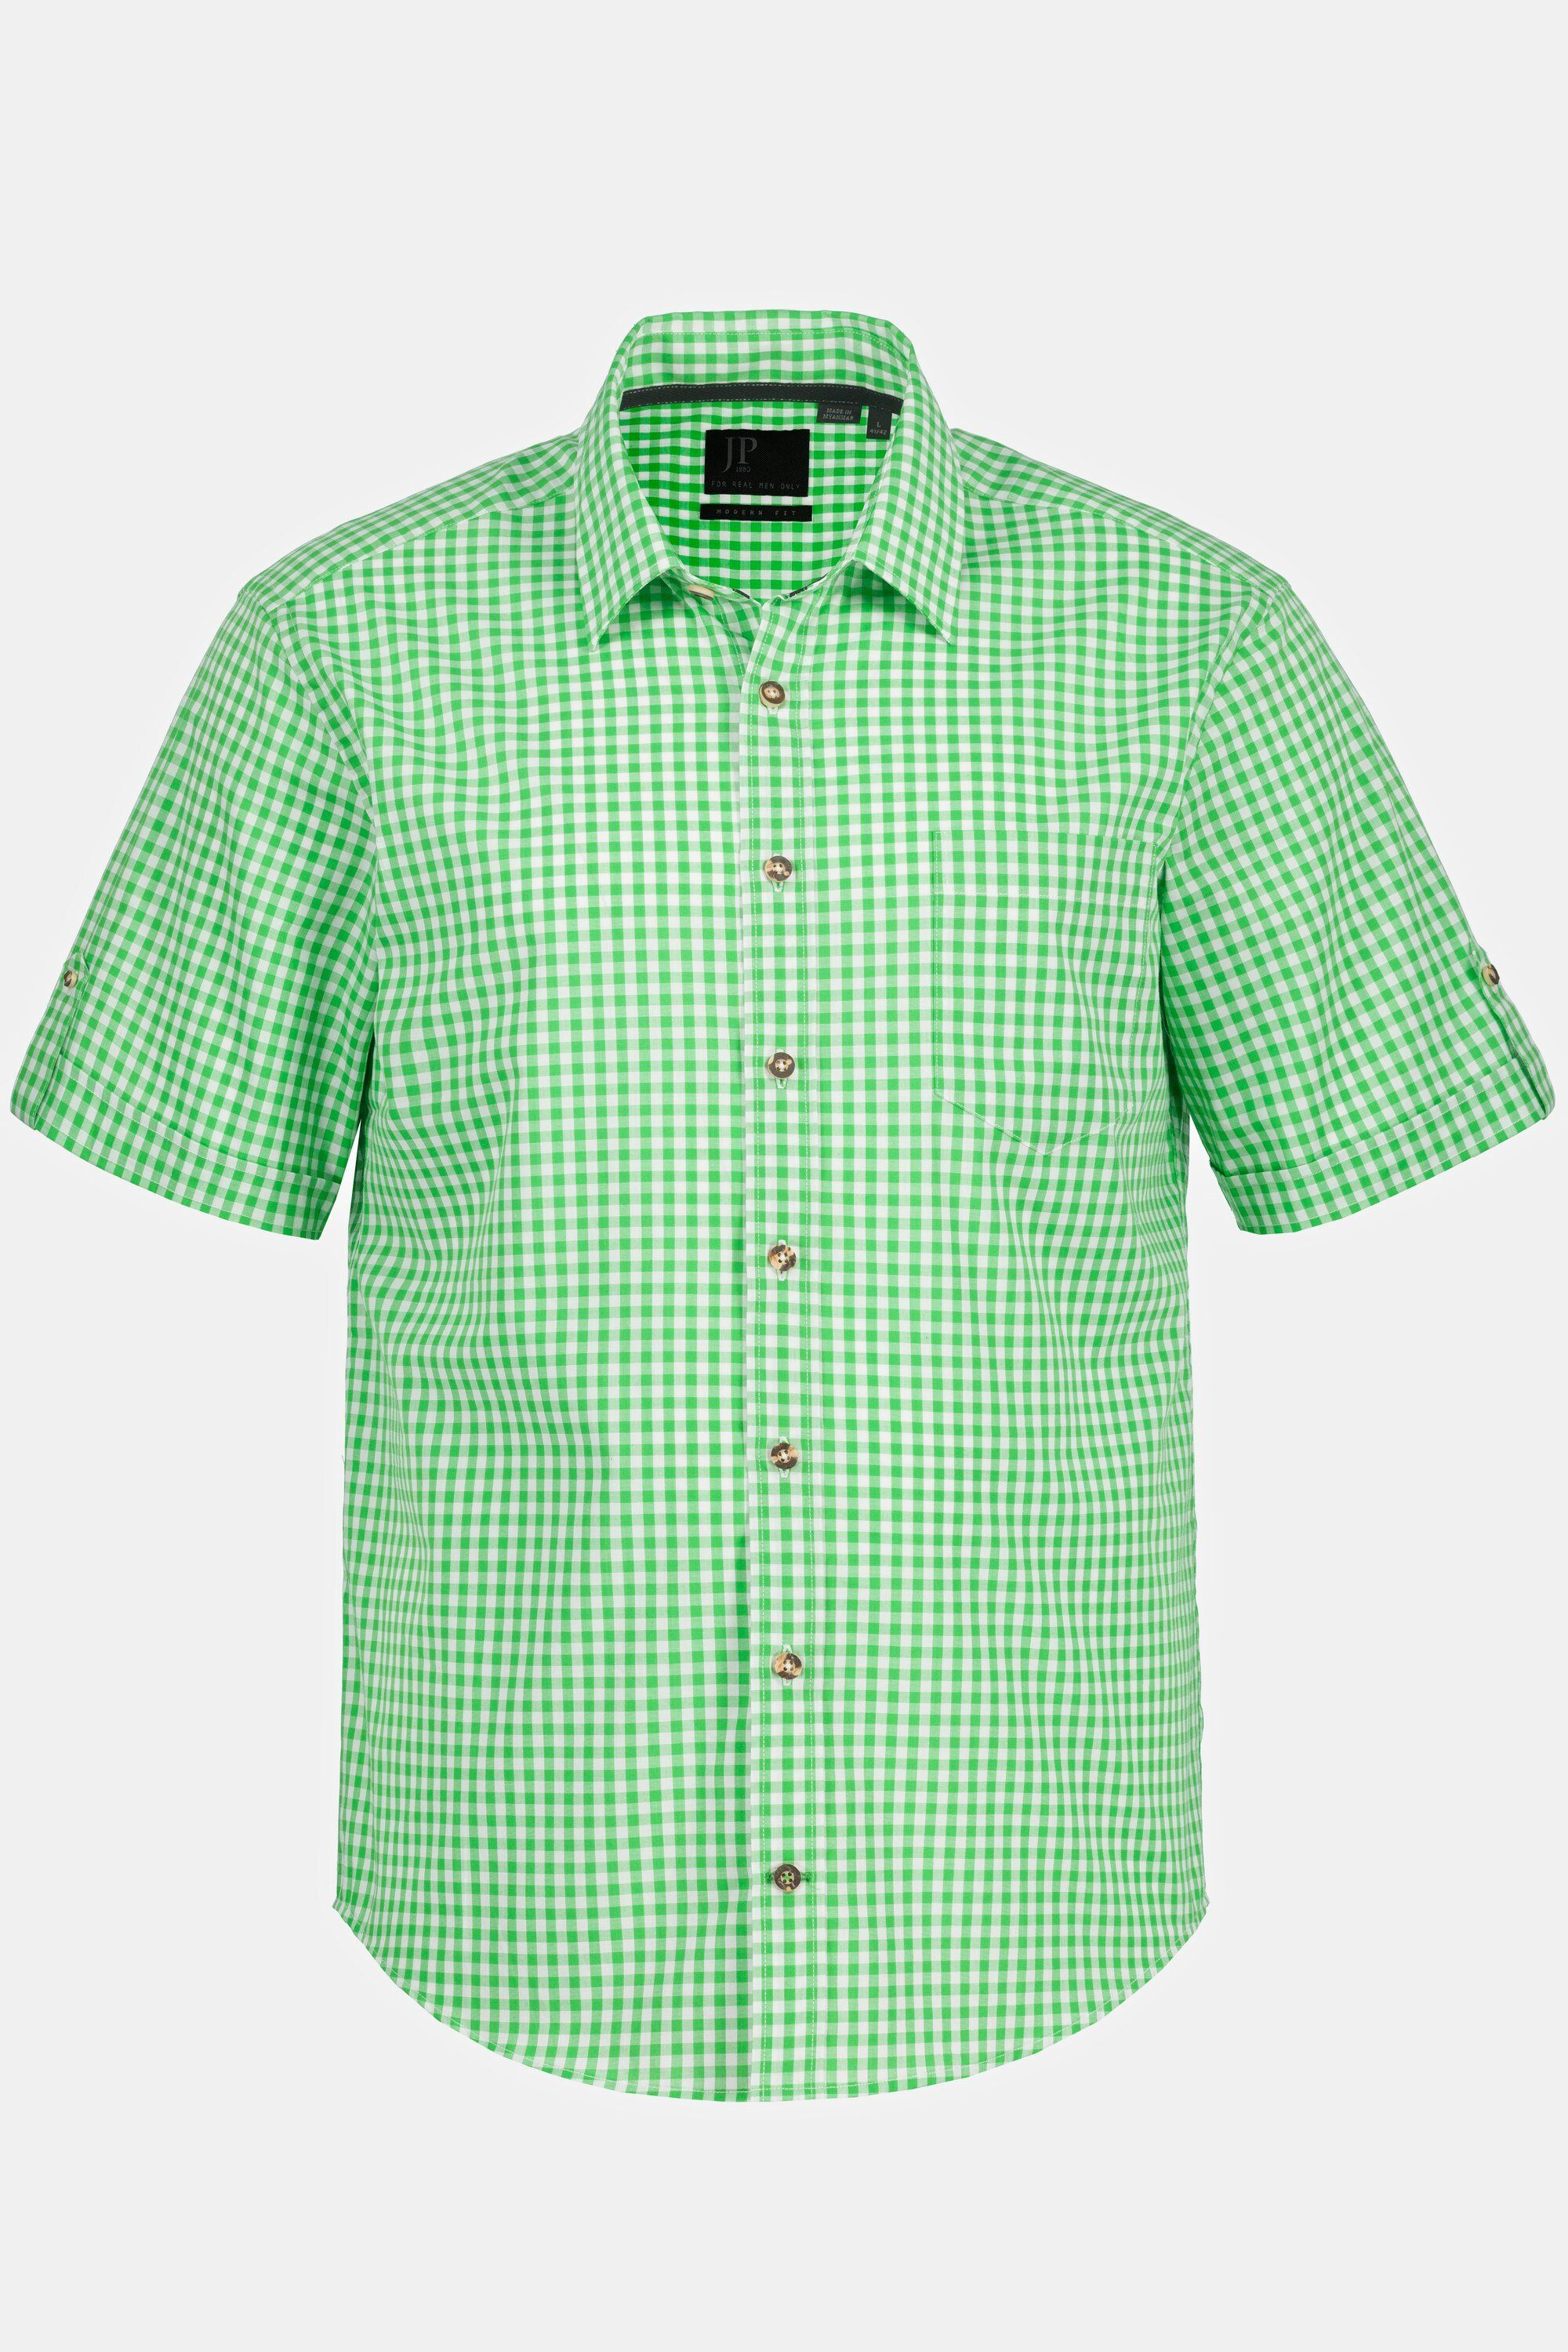 JP1880 Kurzarmhemd Hemd Tracht Halbarm Kragen Modern apfelgrün Kent Fit